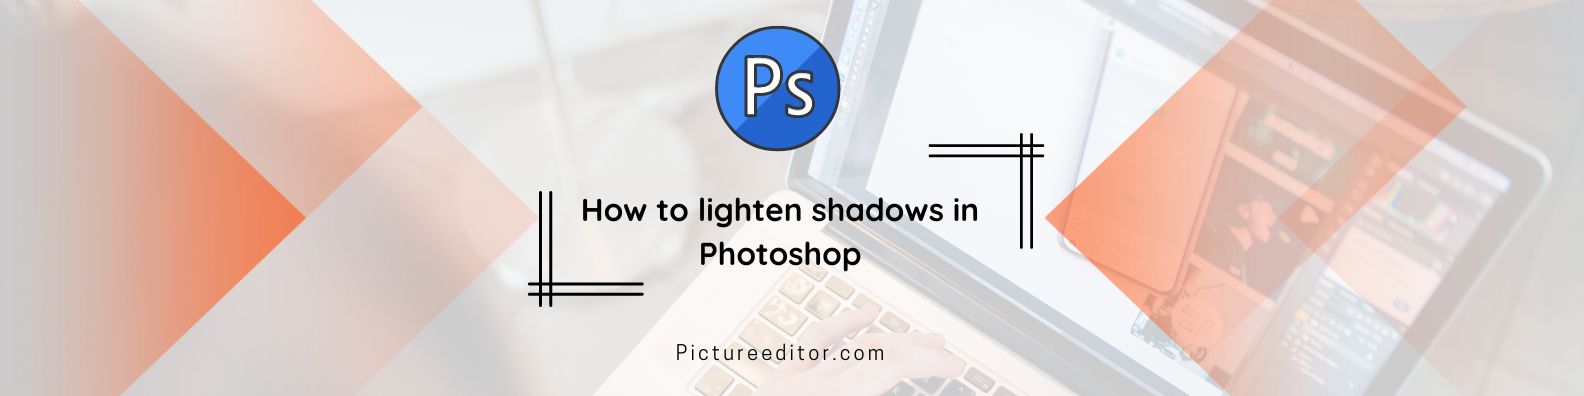 How to lighten shadows in Photoshop